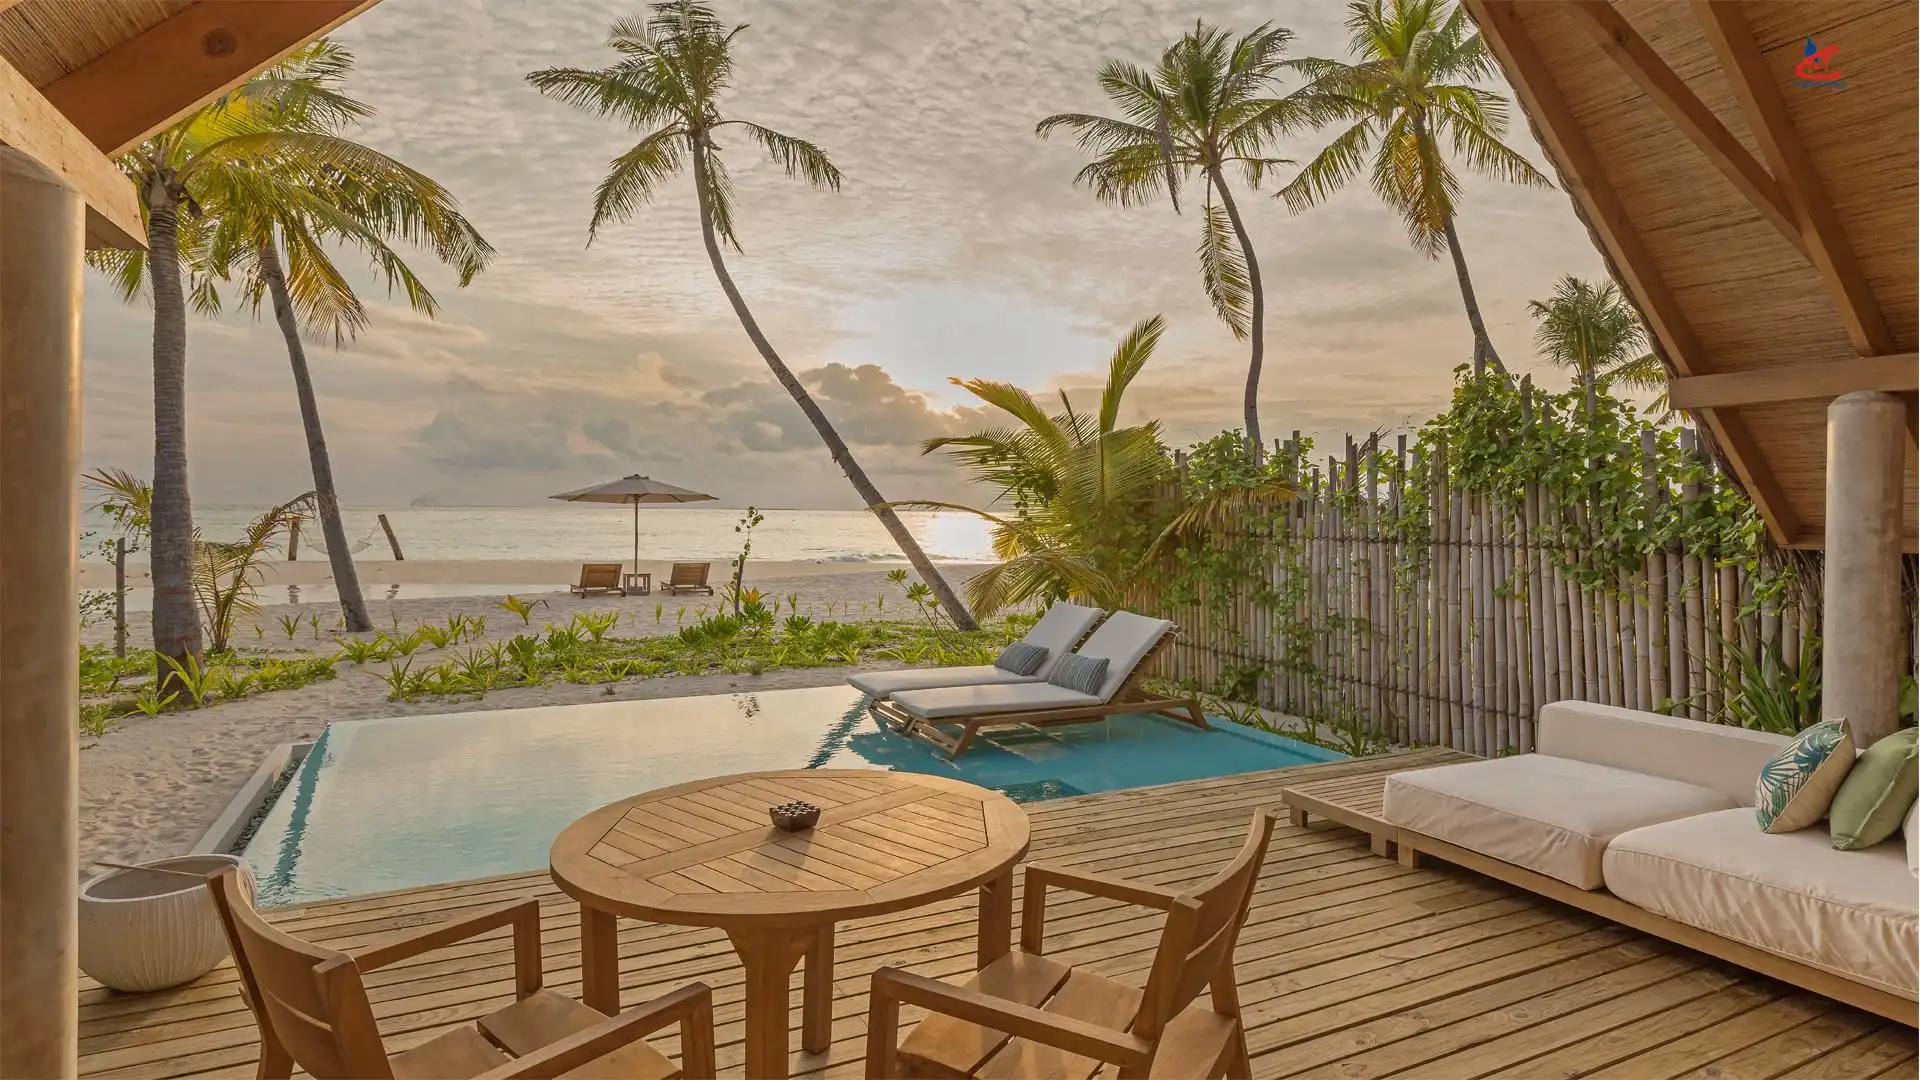 Fushifaru Maldives beach pool villa